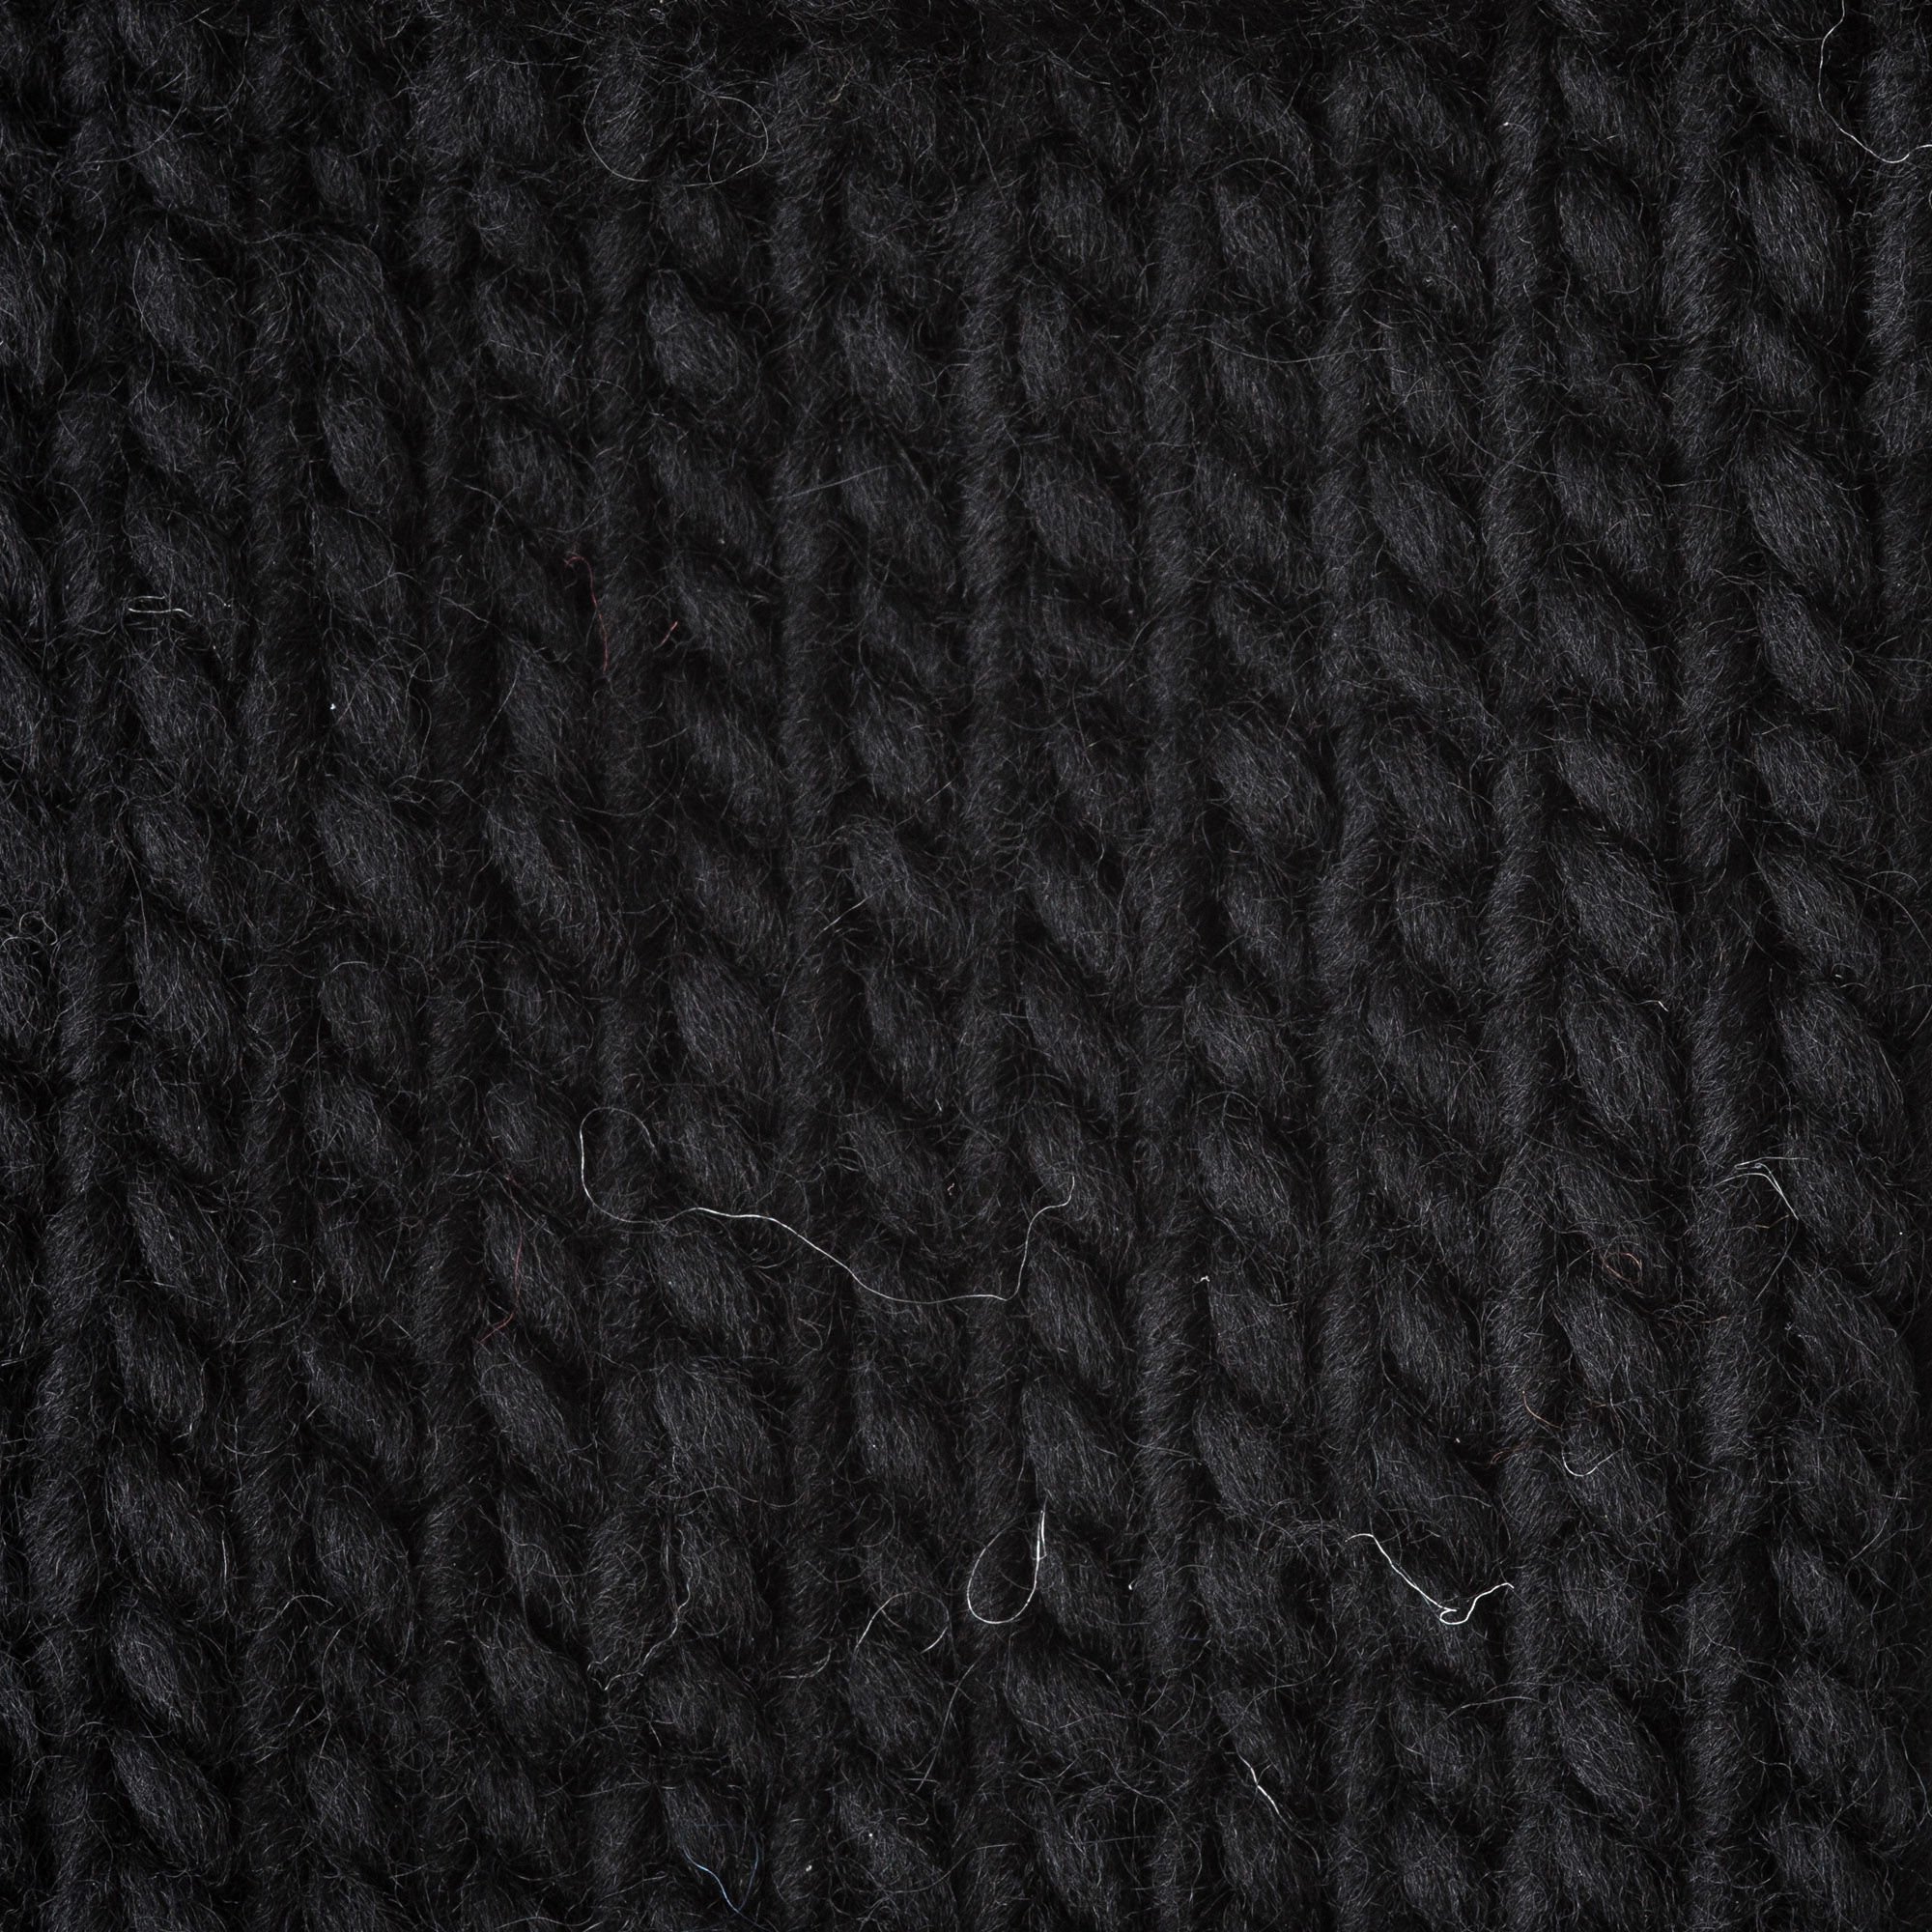 Patons Classic Wool Roving Yarn, 3.5 oz, Black, 1 Ball